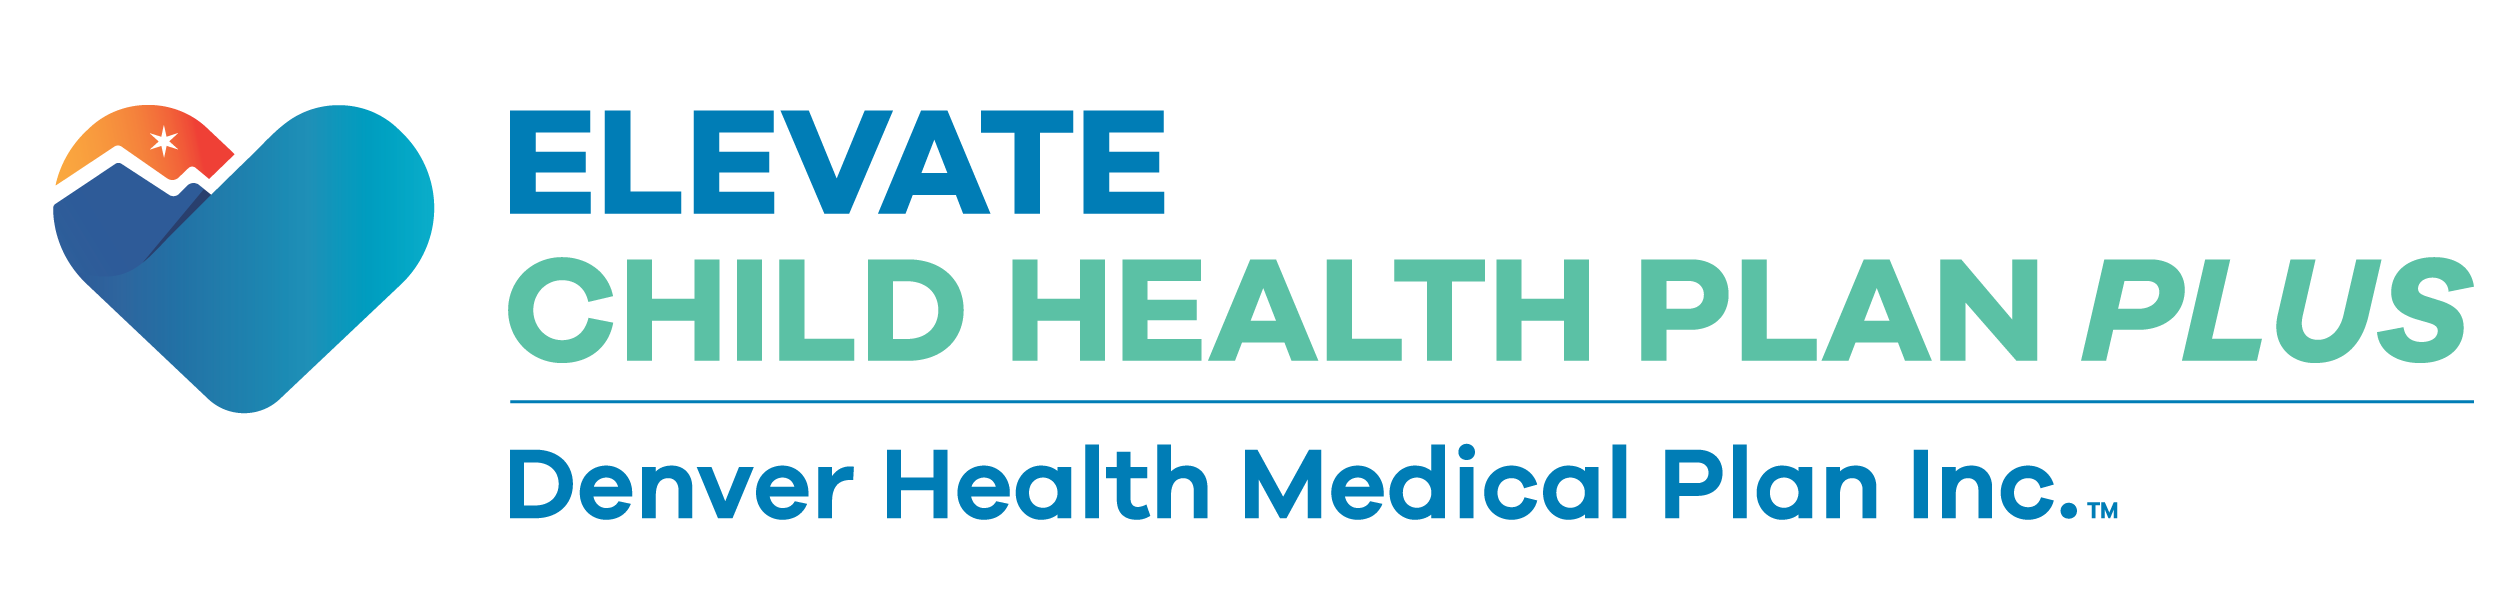 Denver Health Medical Plan, Inc. CHP Logo